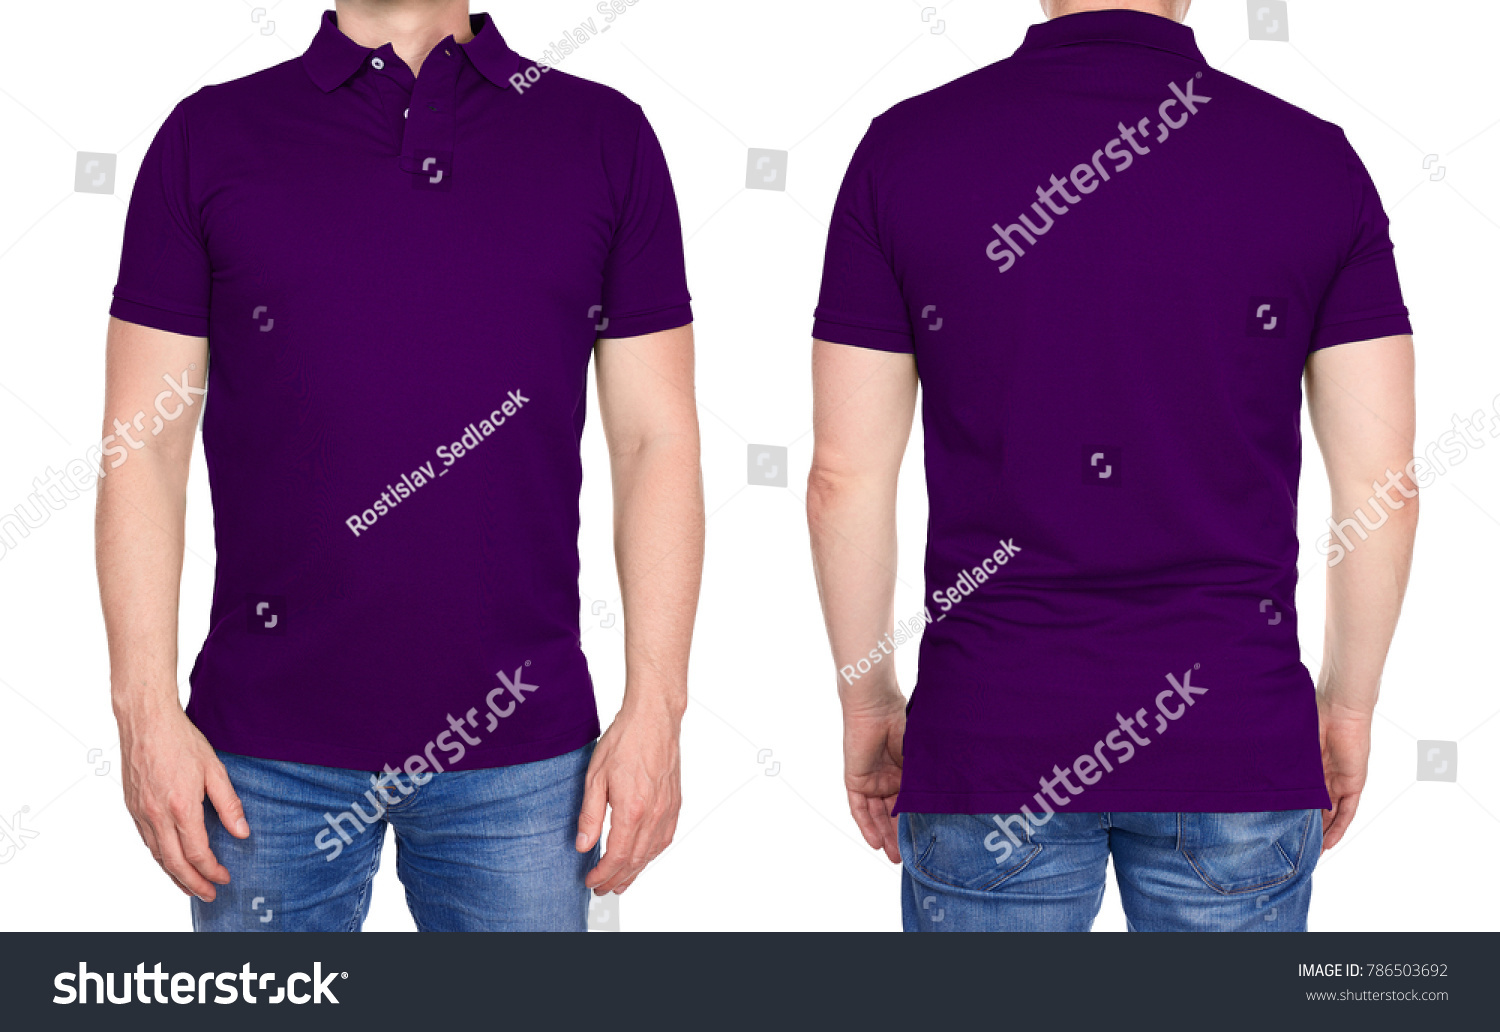 Tshirt Design Young Man Blank Purple Stock Photo 786503692 | Shutterstock